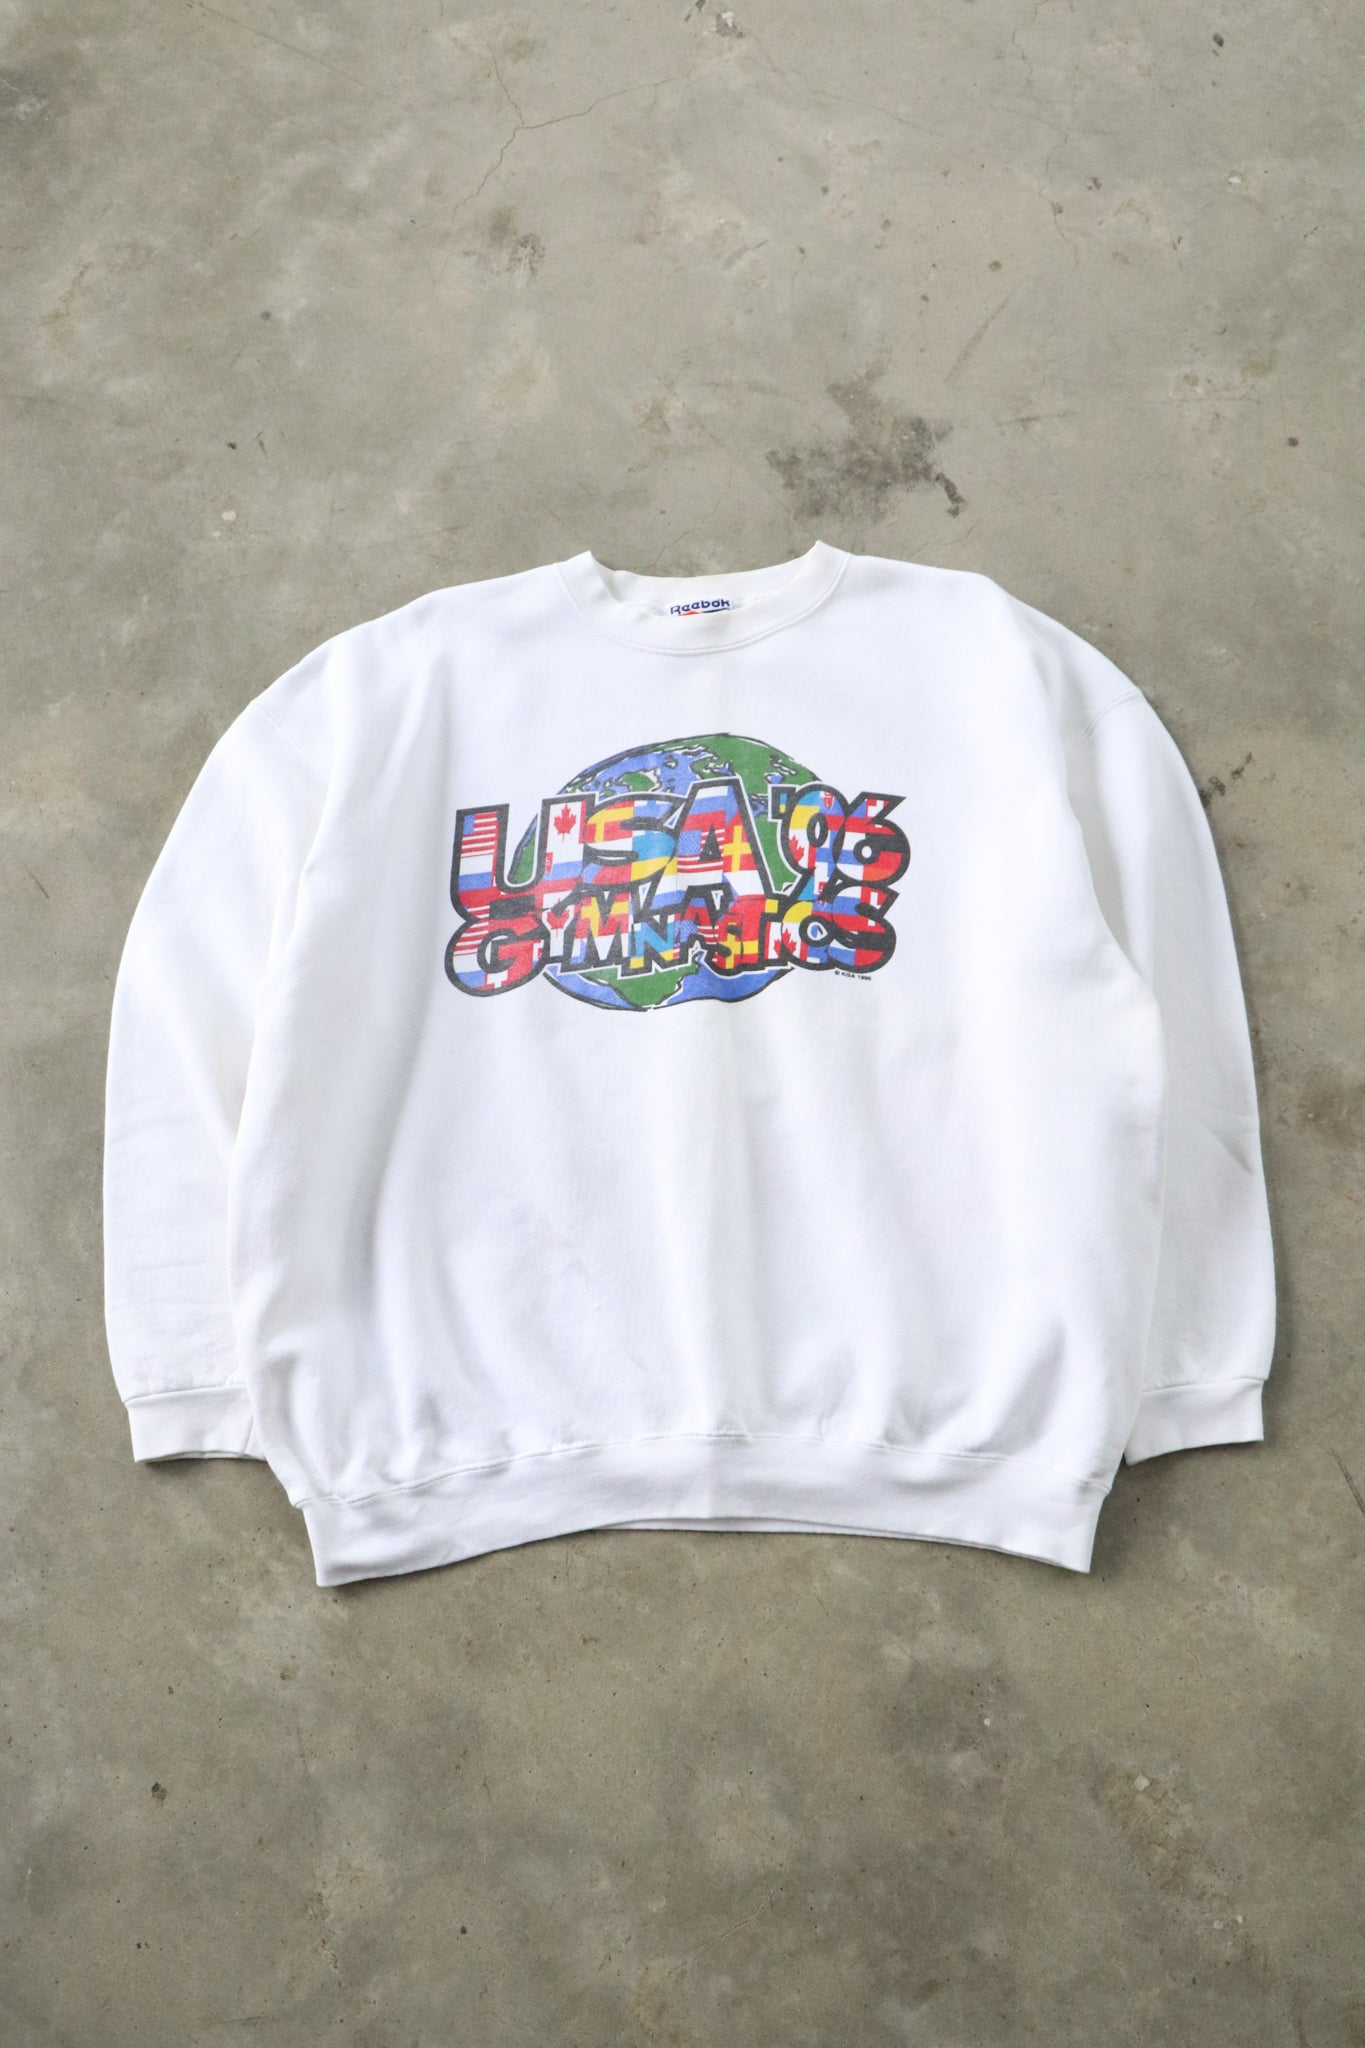 Vintage 1996 USA Olympics Sweater XL